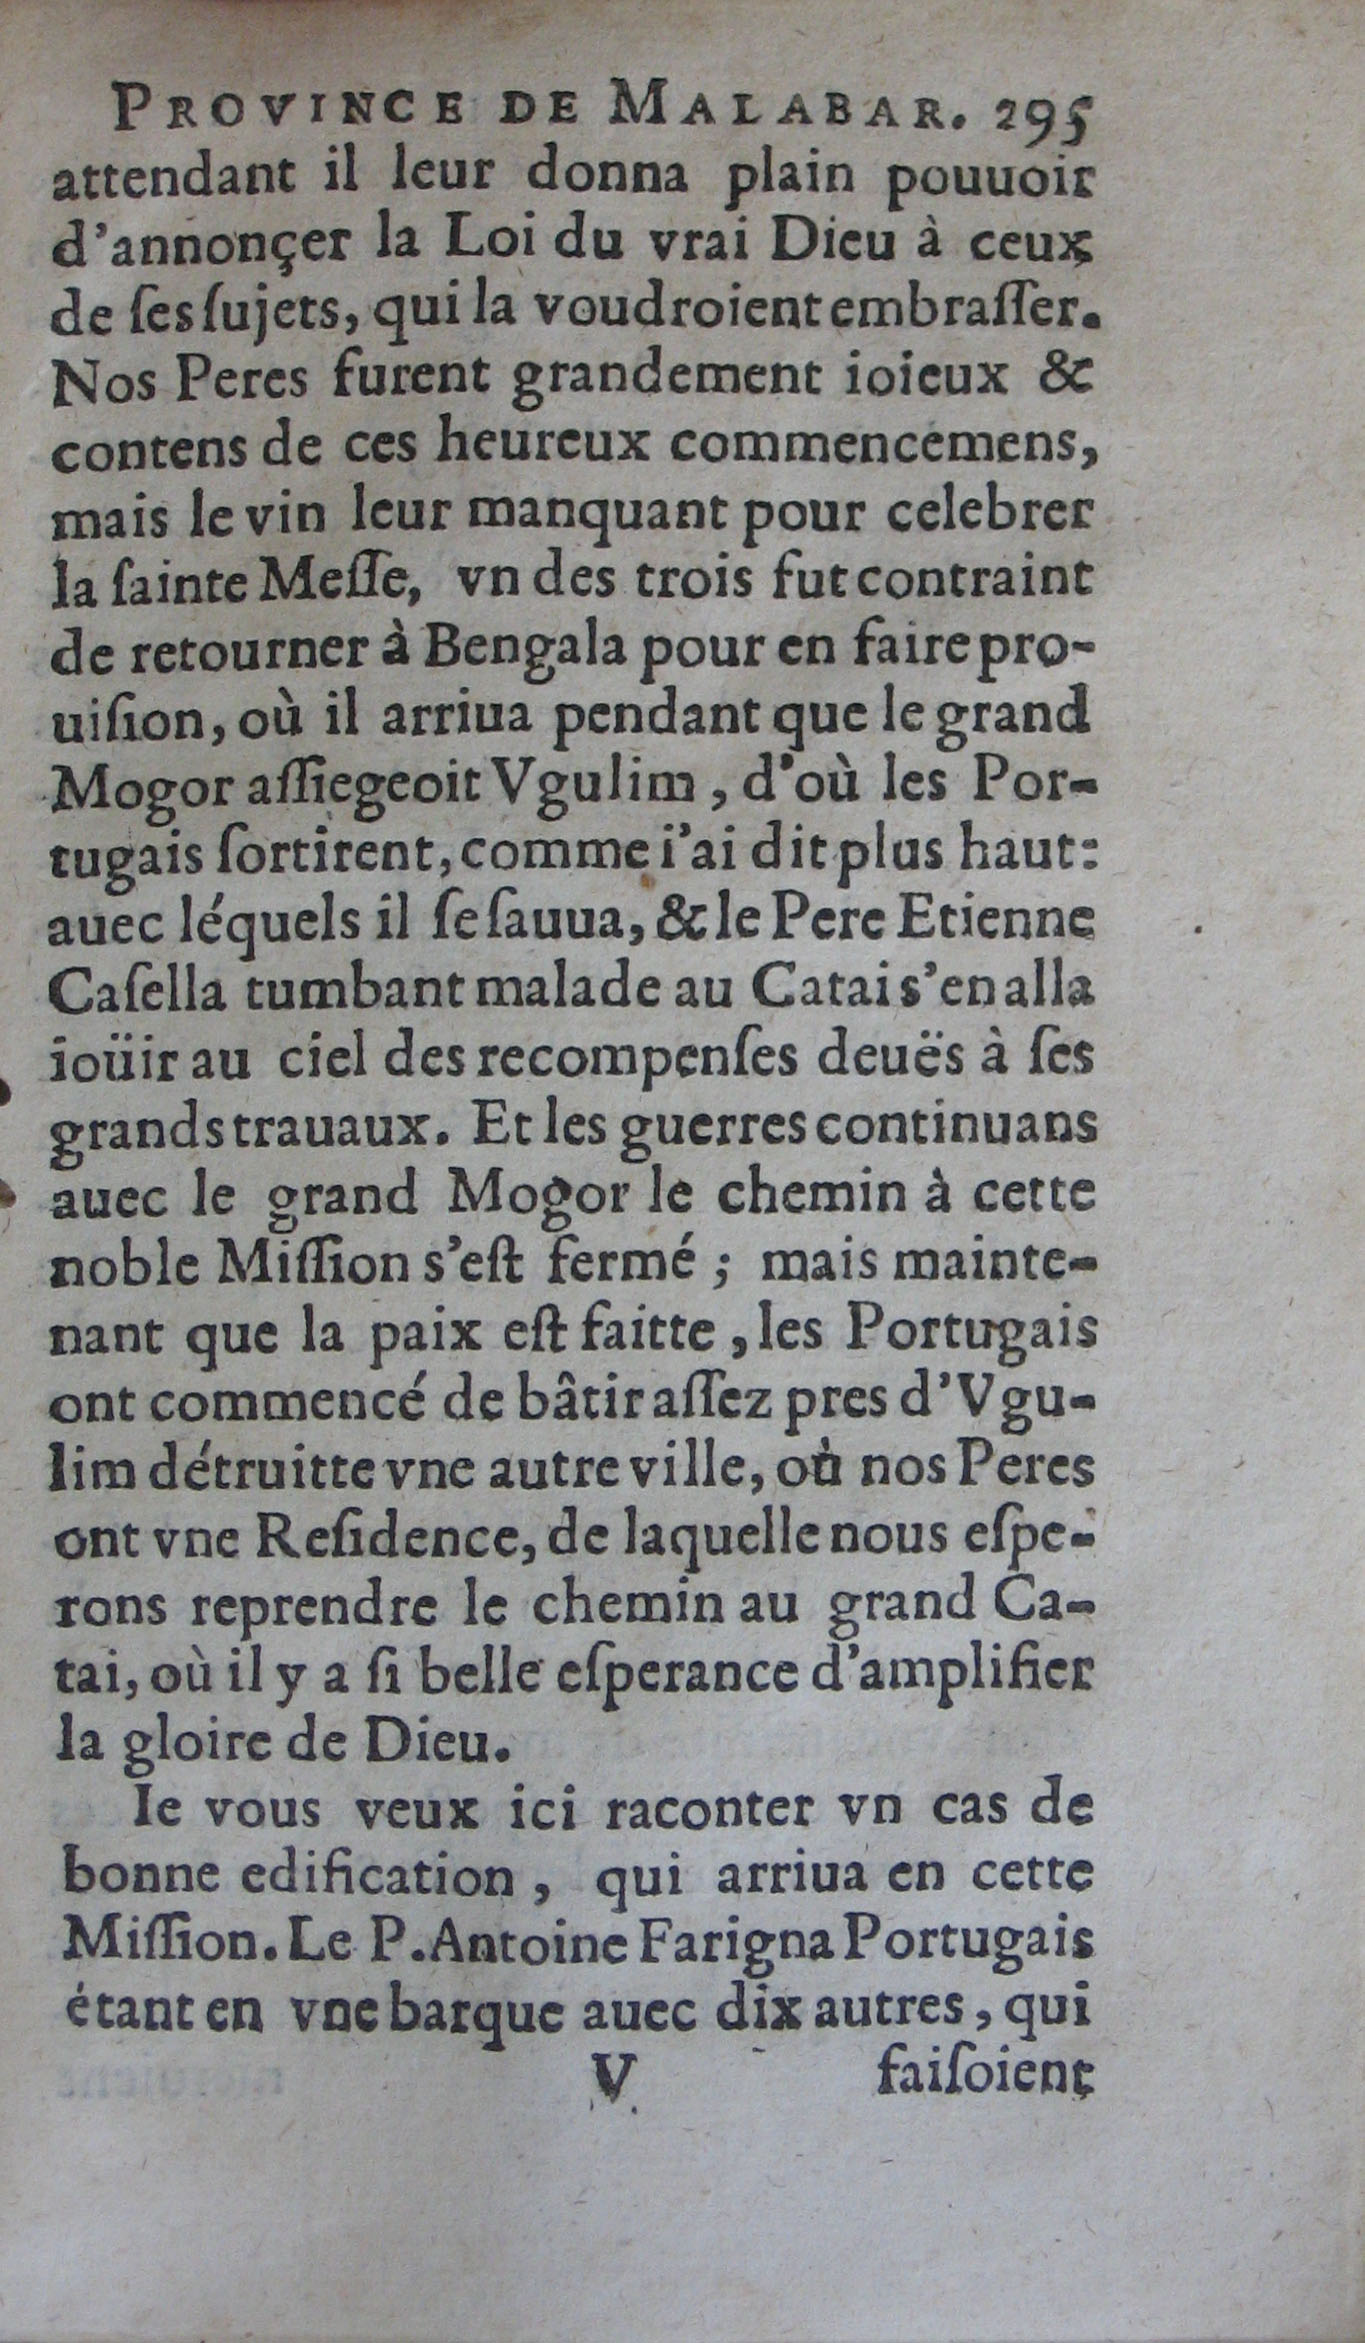 p. 295.JPG